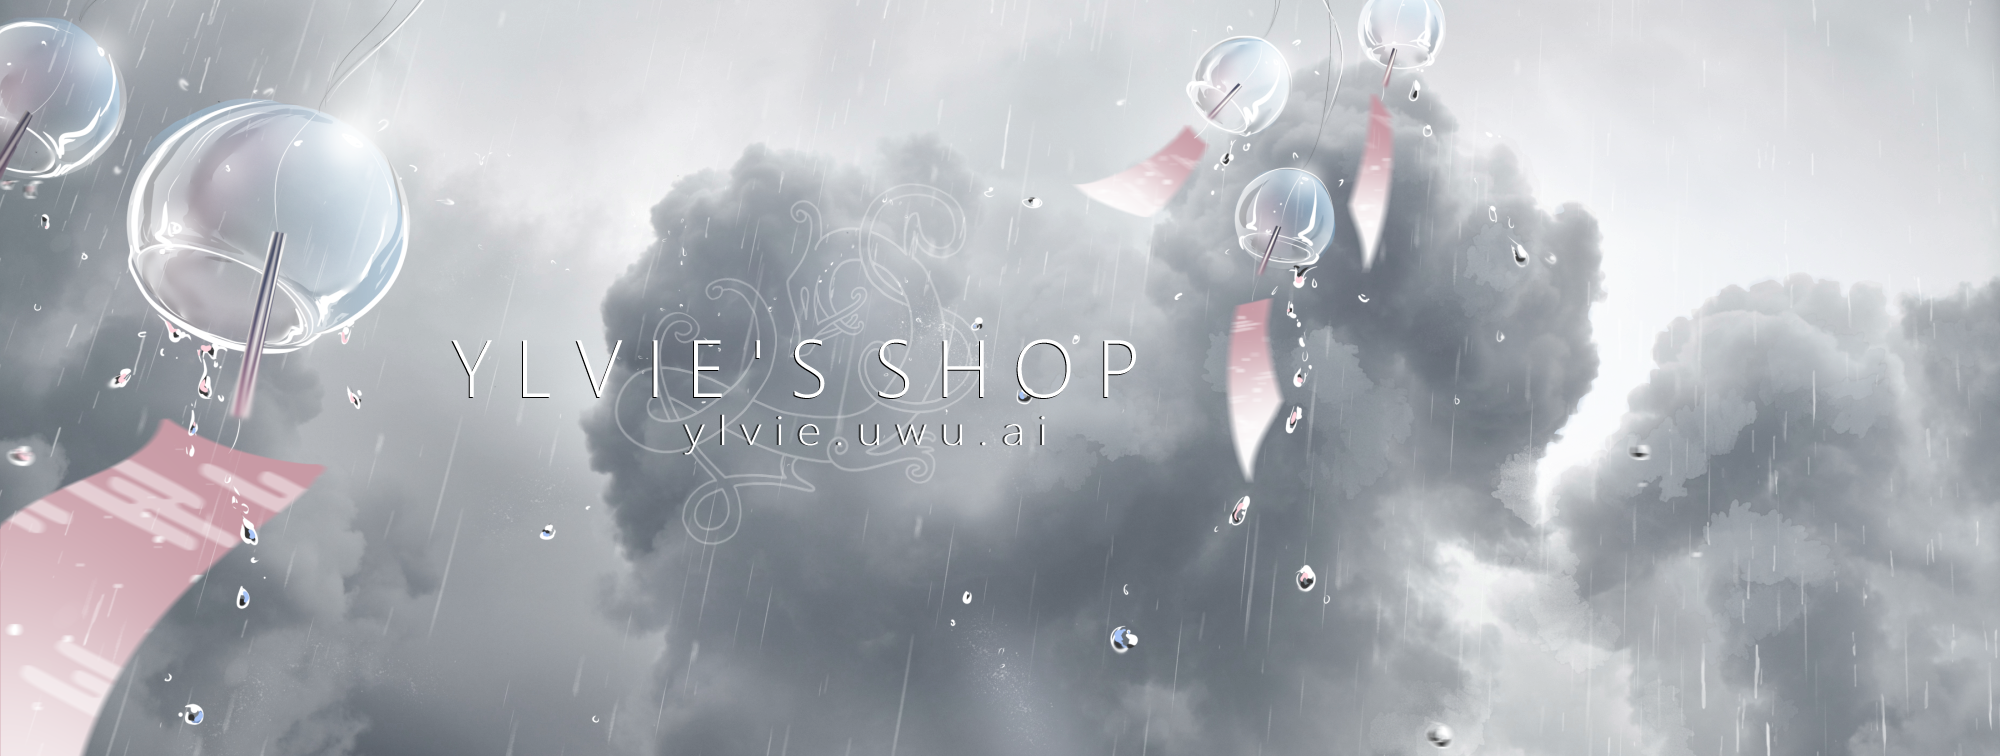 Ylvie's Shop ♡